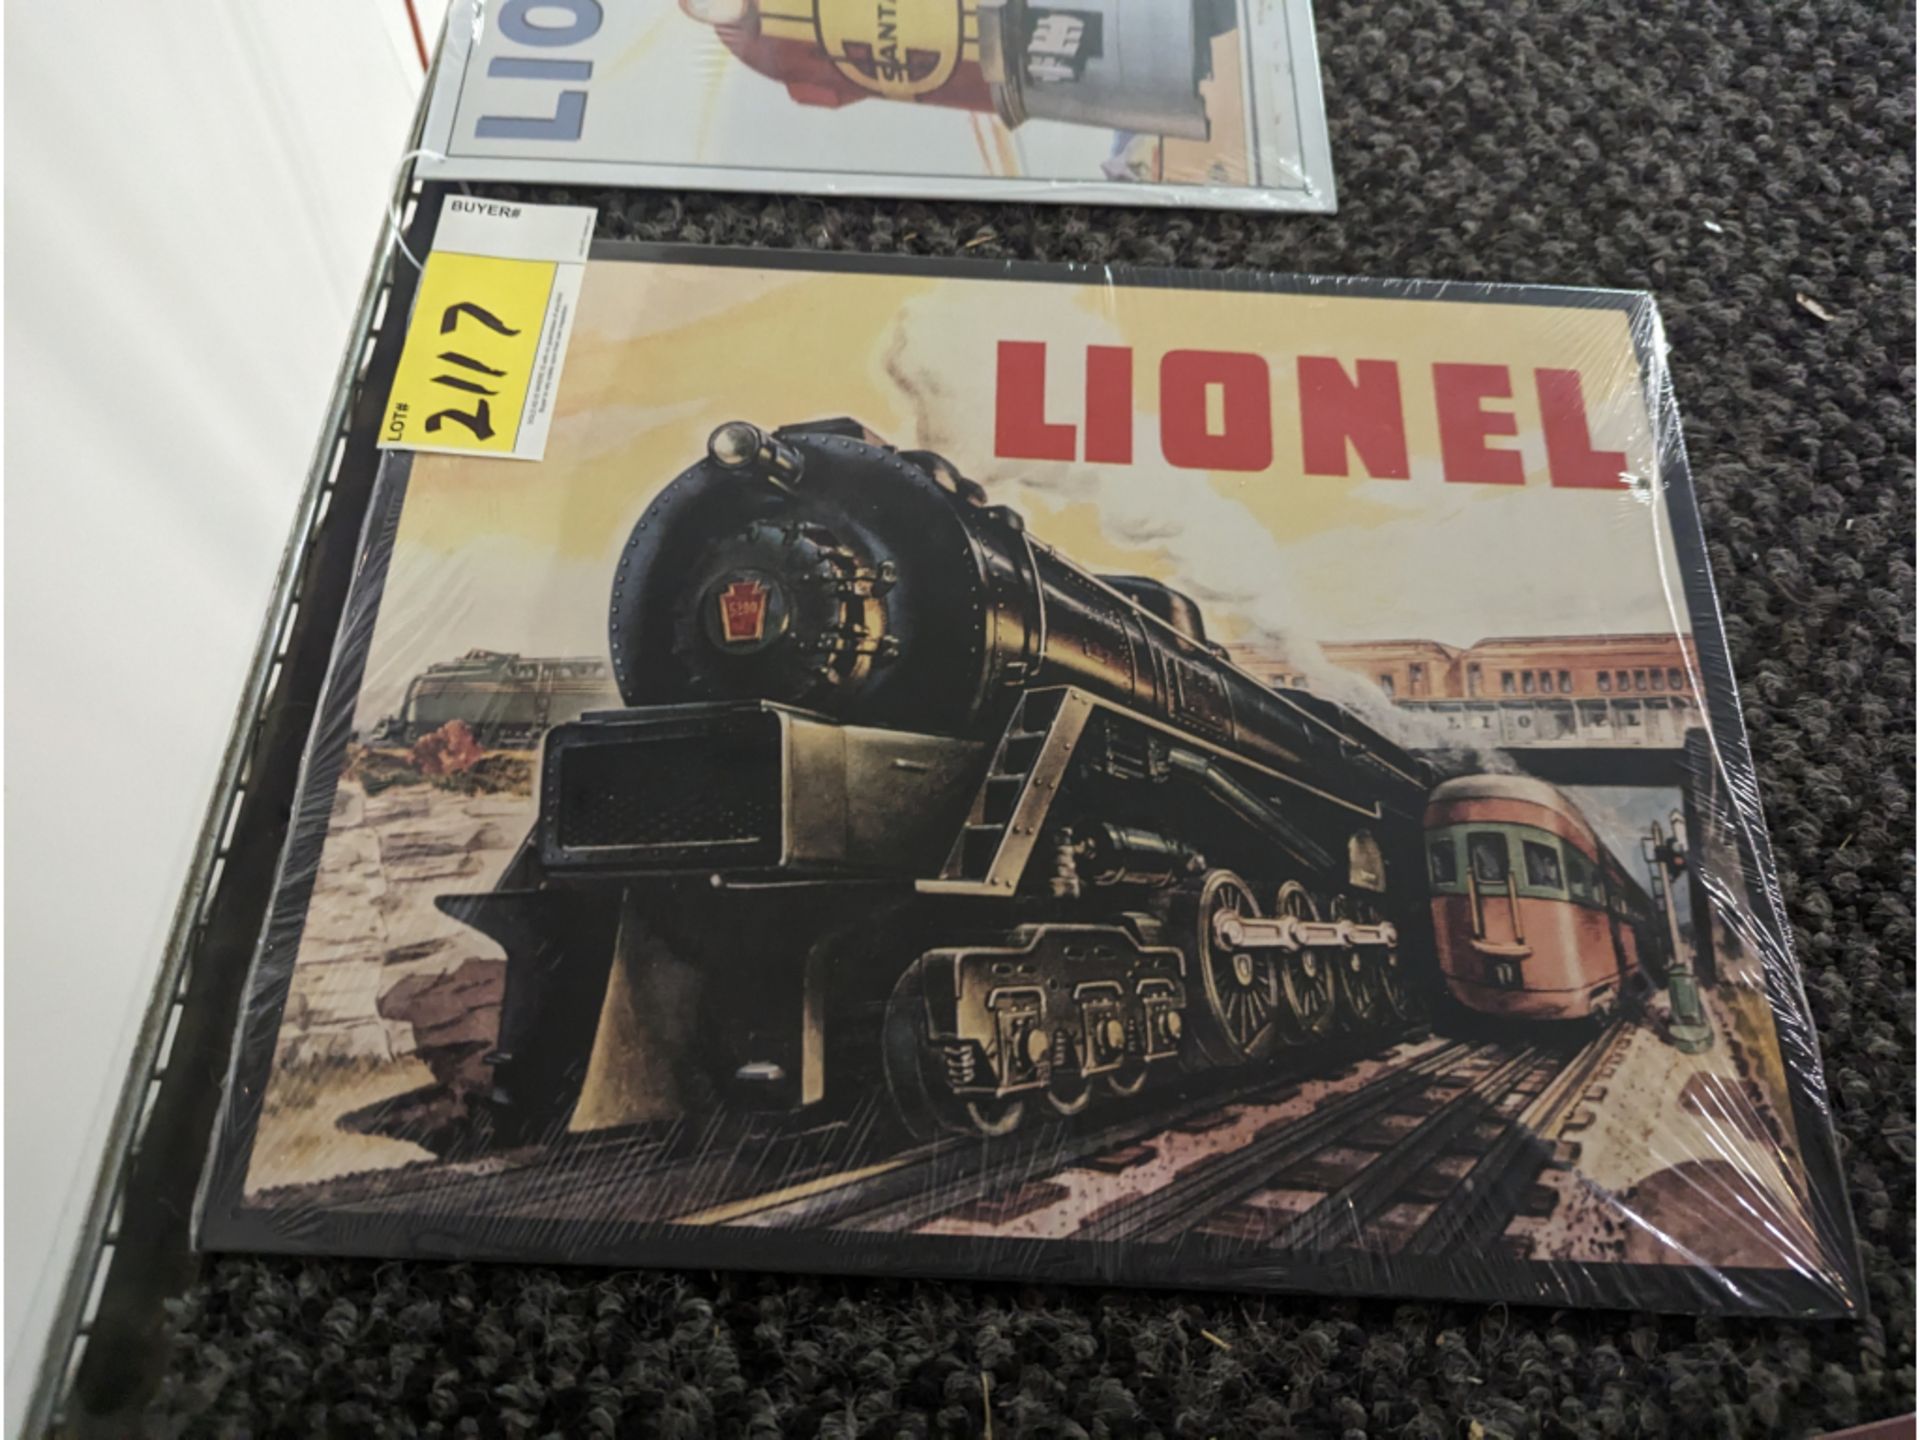 "2 Retro Vintage Signs" Lionel Trains - Image 3 of 3